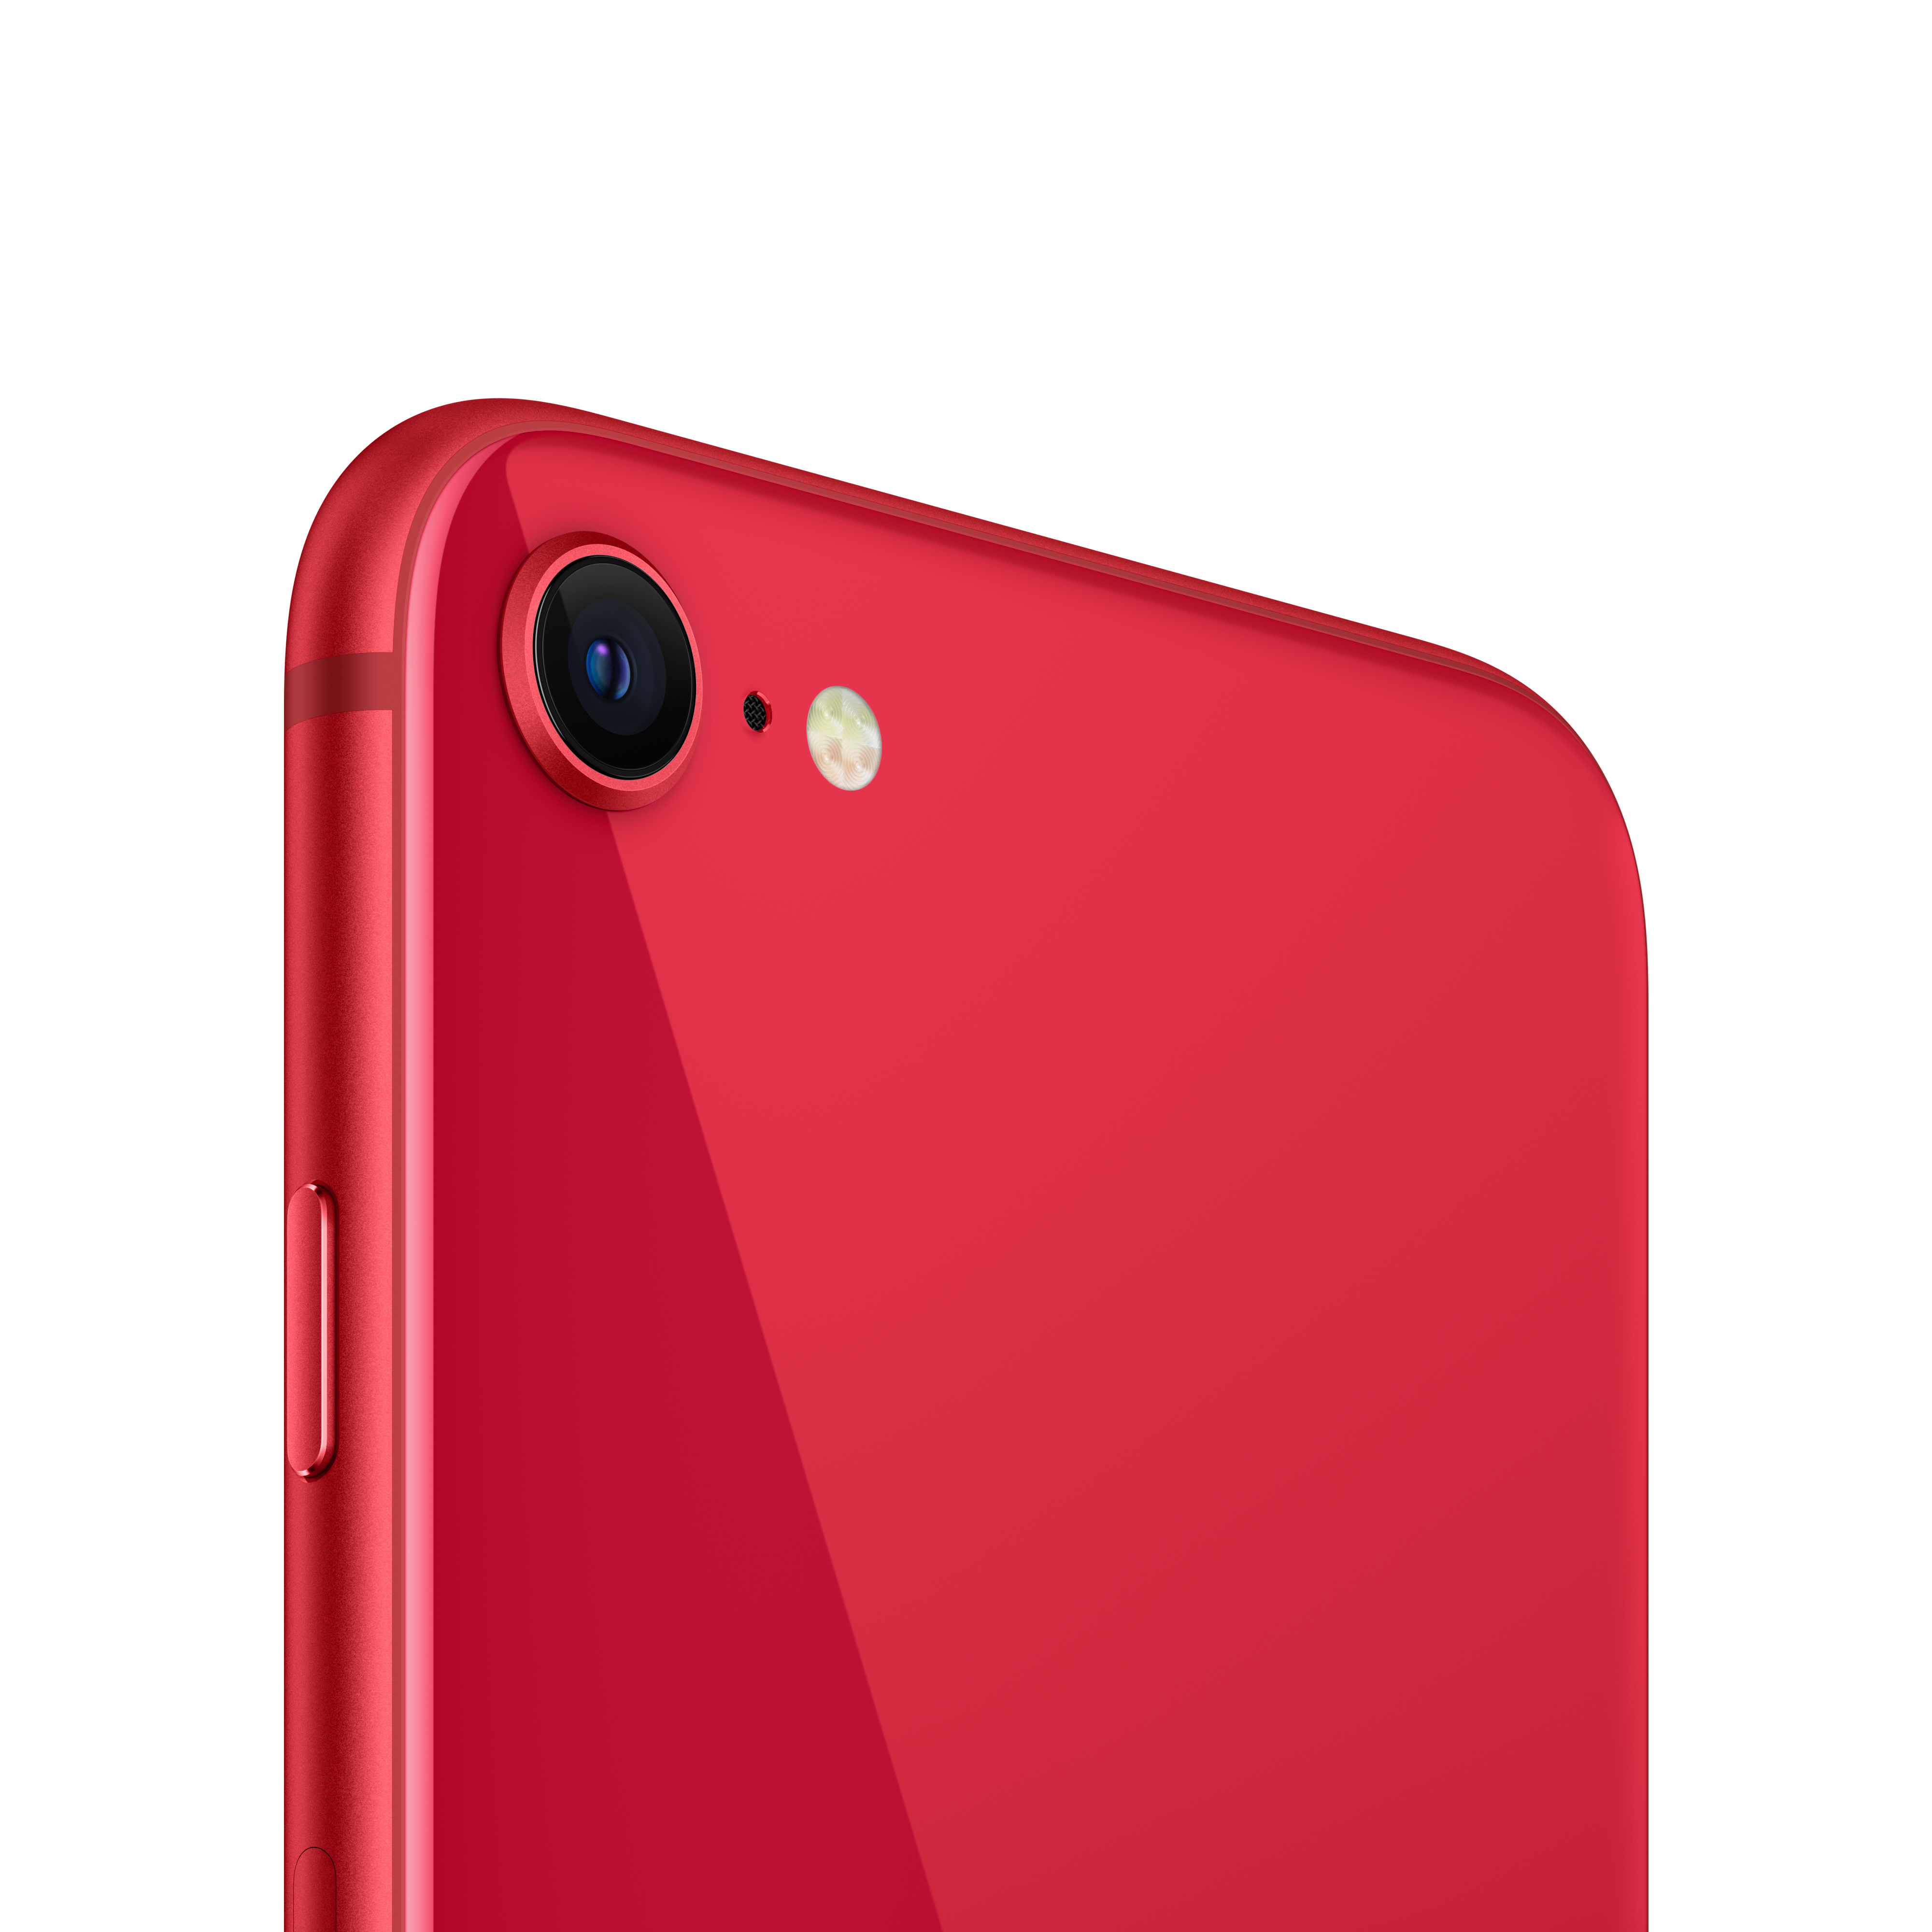 Straight Talk Apple iPhone SE (2020), 64GB, Red- Prepaid Smartphone [Locked to Straight Talk] - image 5 of 8